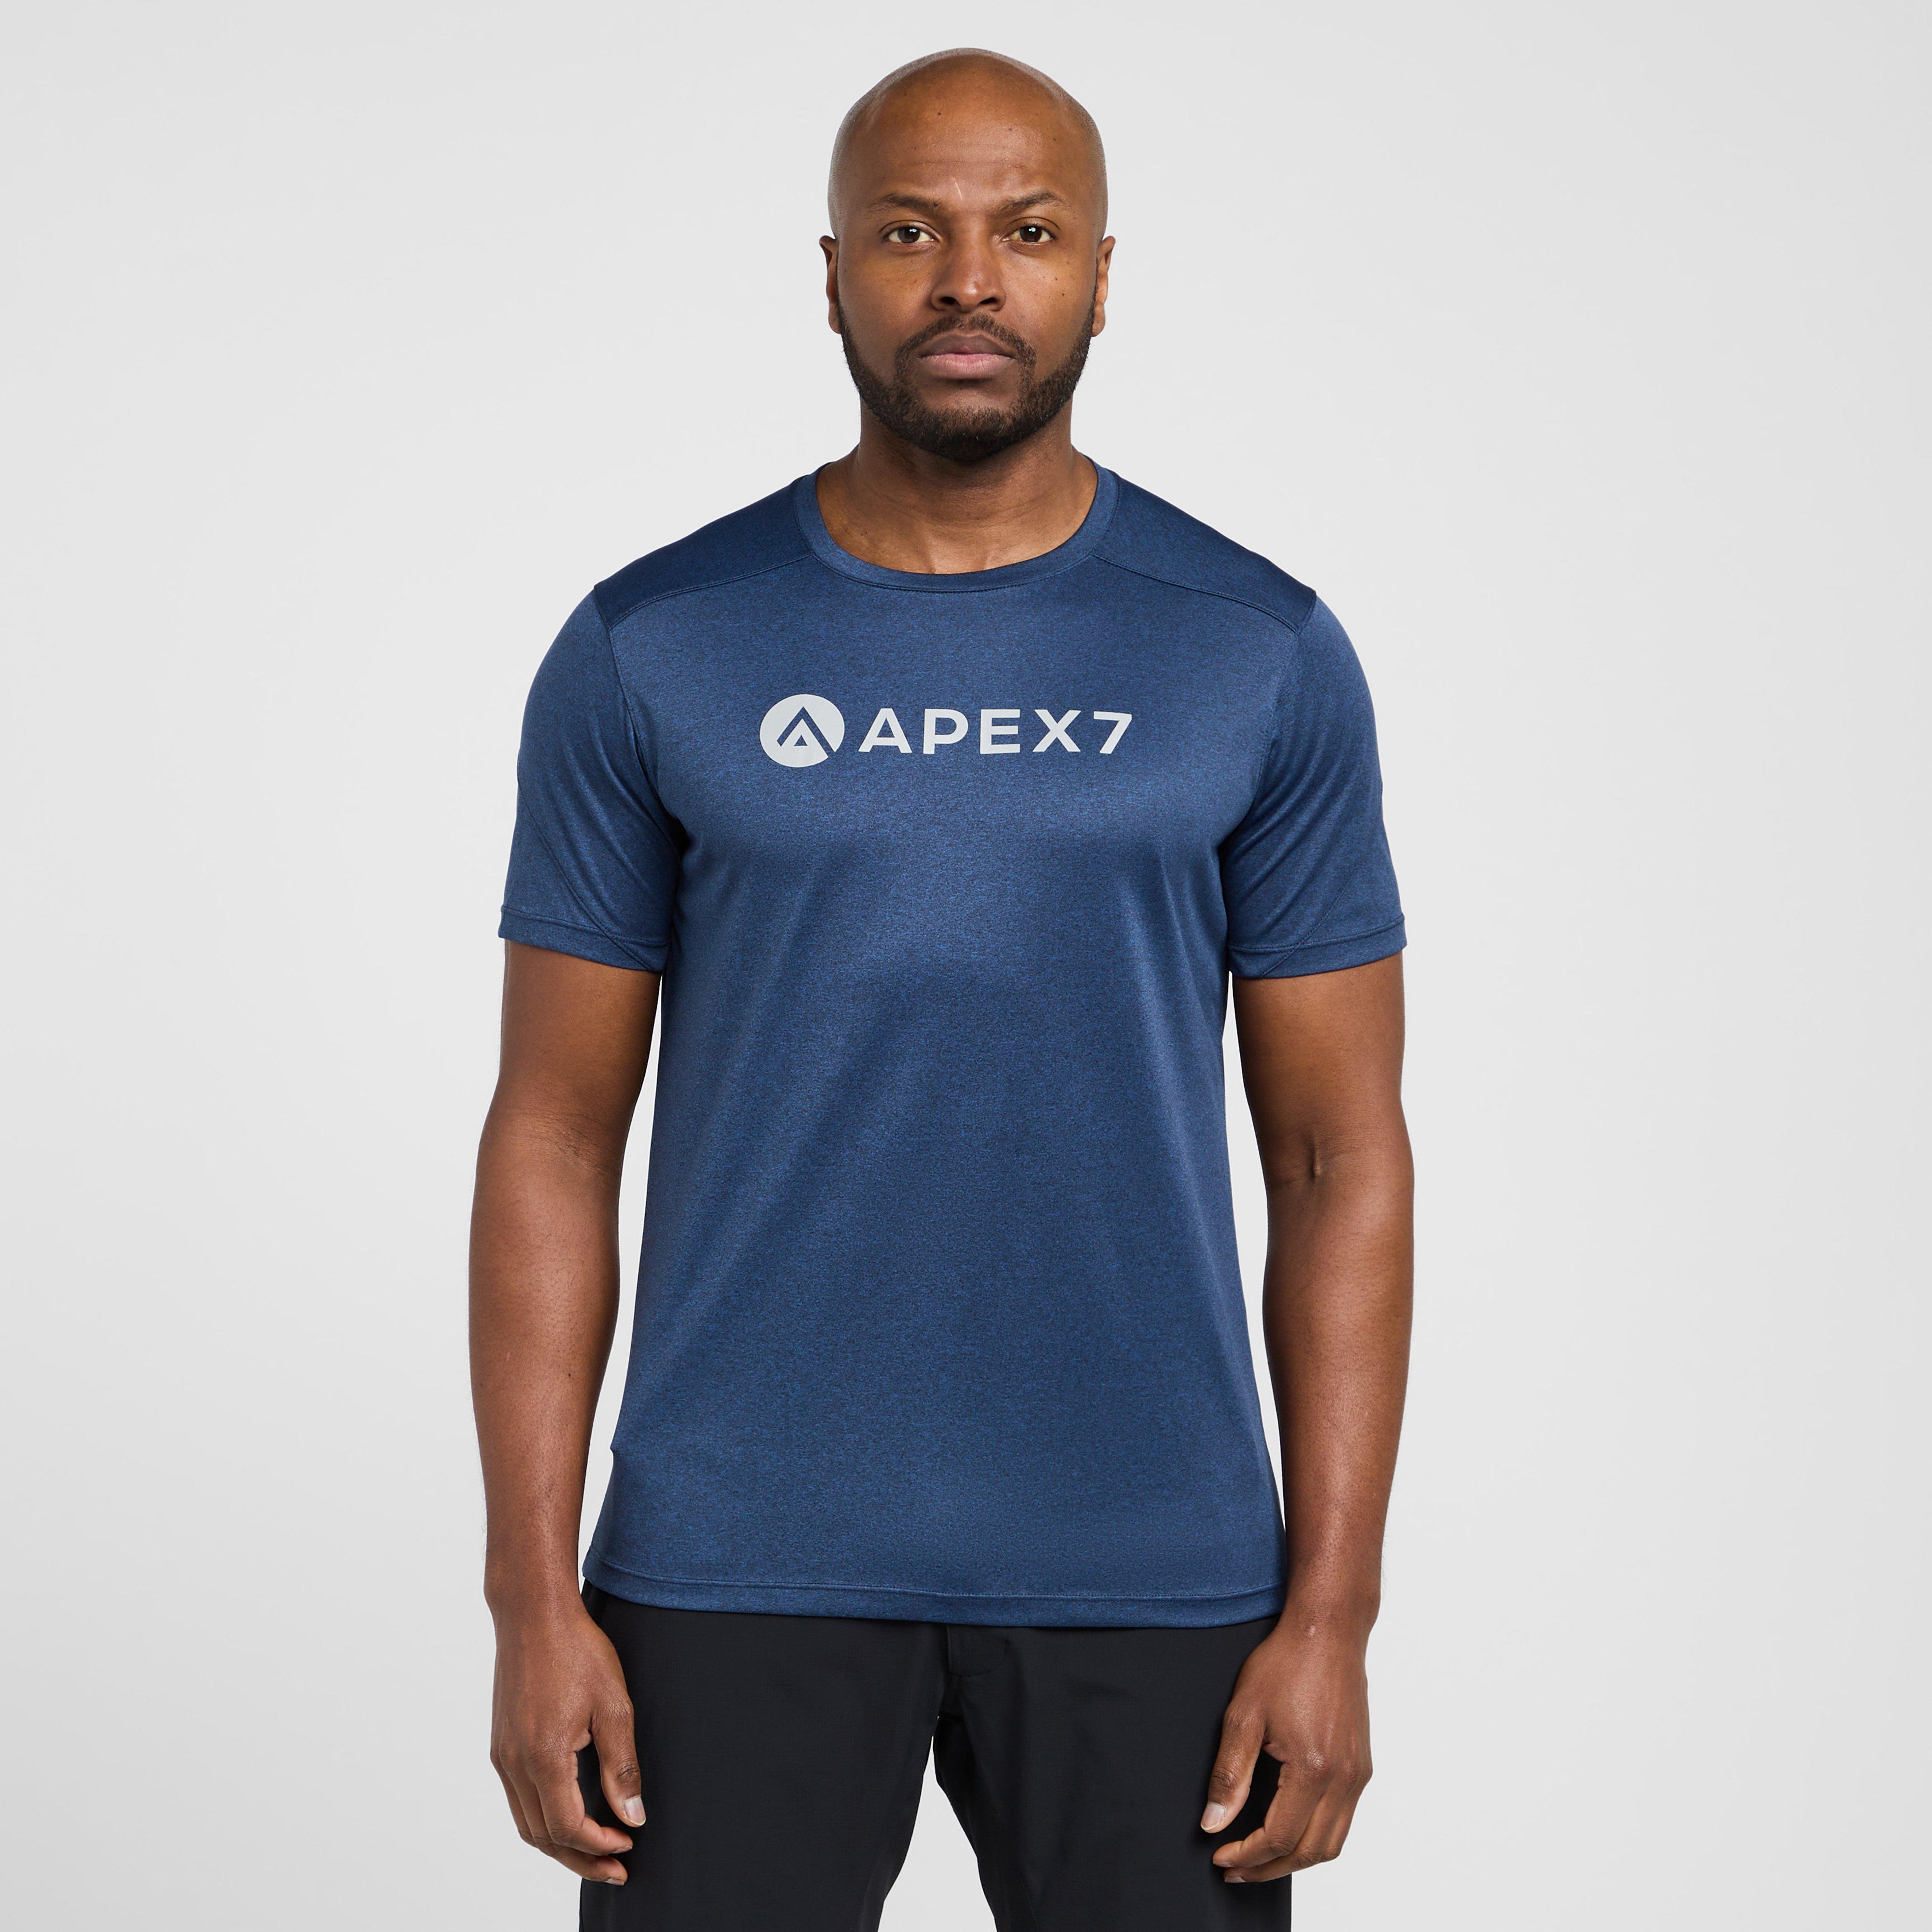 Go Outdoors APEX7 Xenon Short Sleeve Tech T-Shirt, Navy